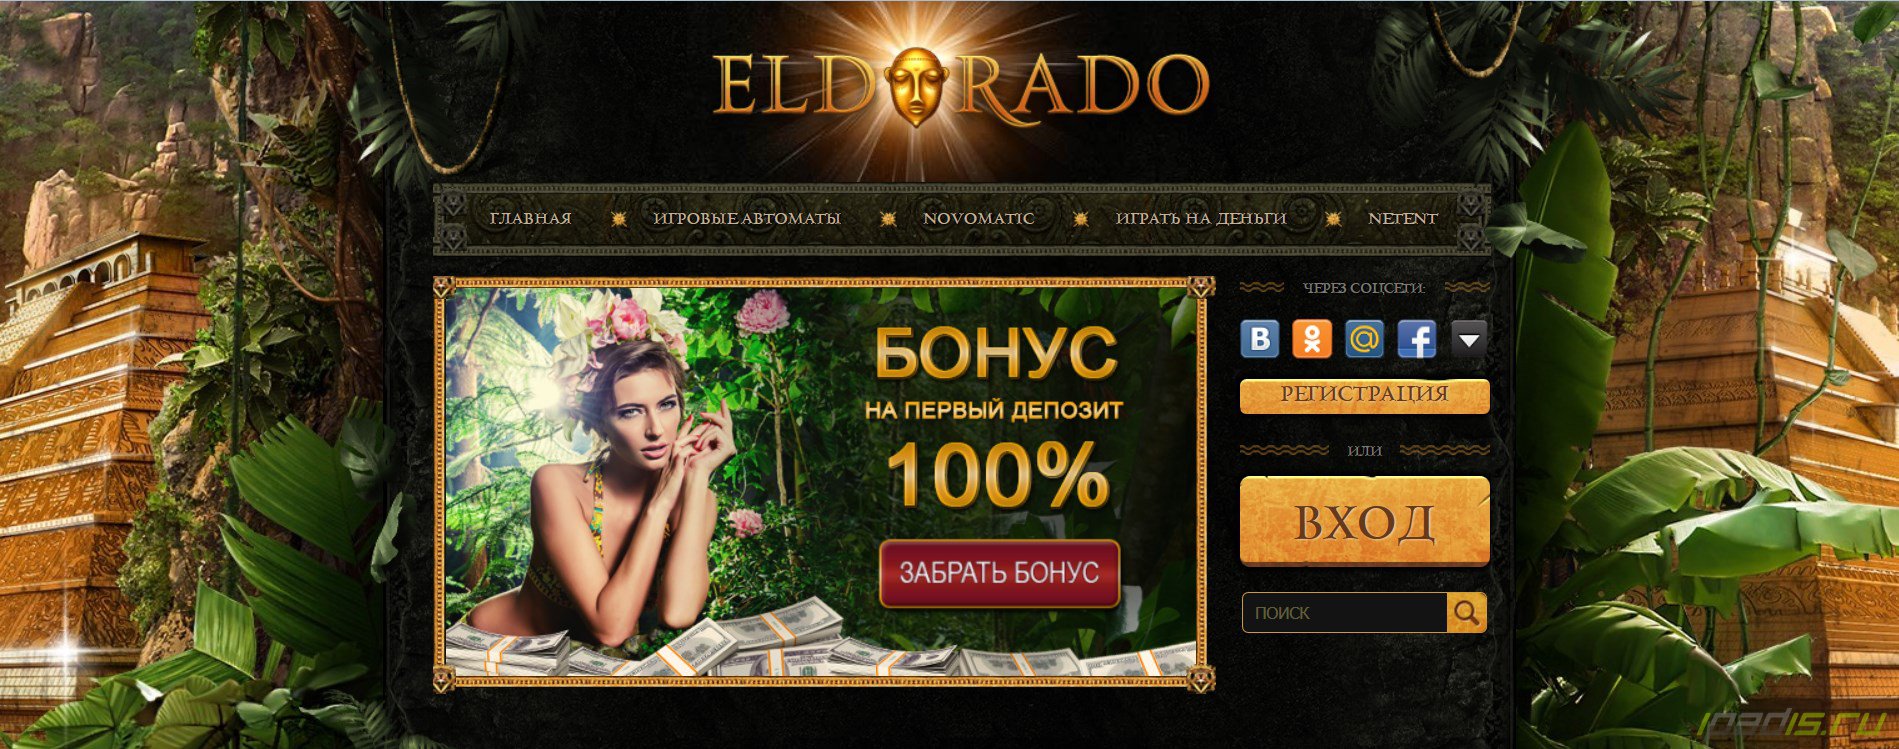 Eldorado casino work casino x на деньги stavka2021 ru